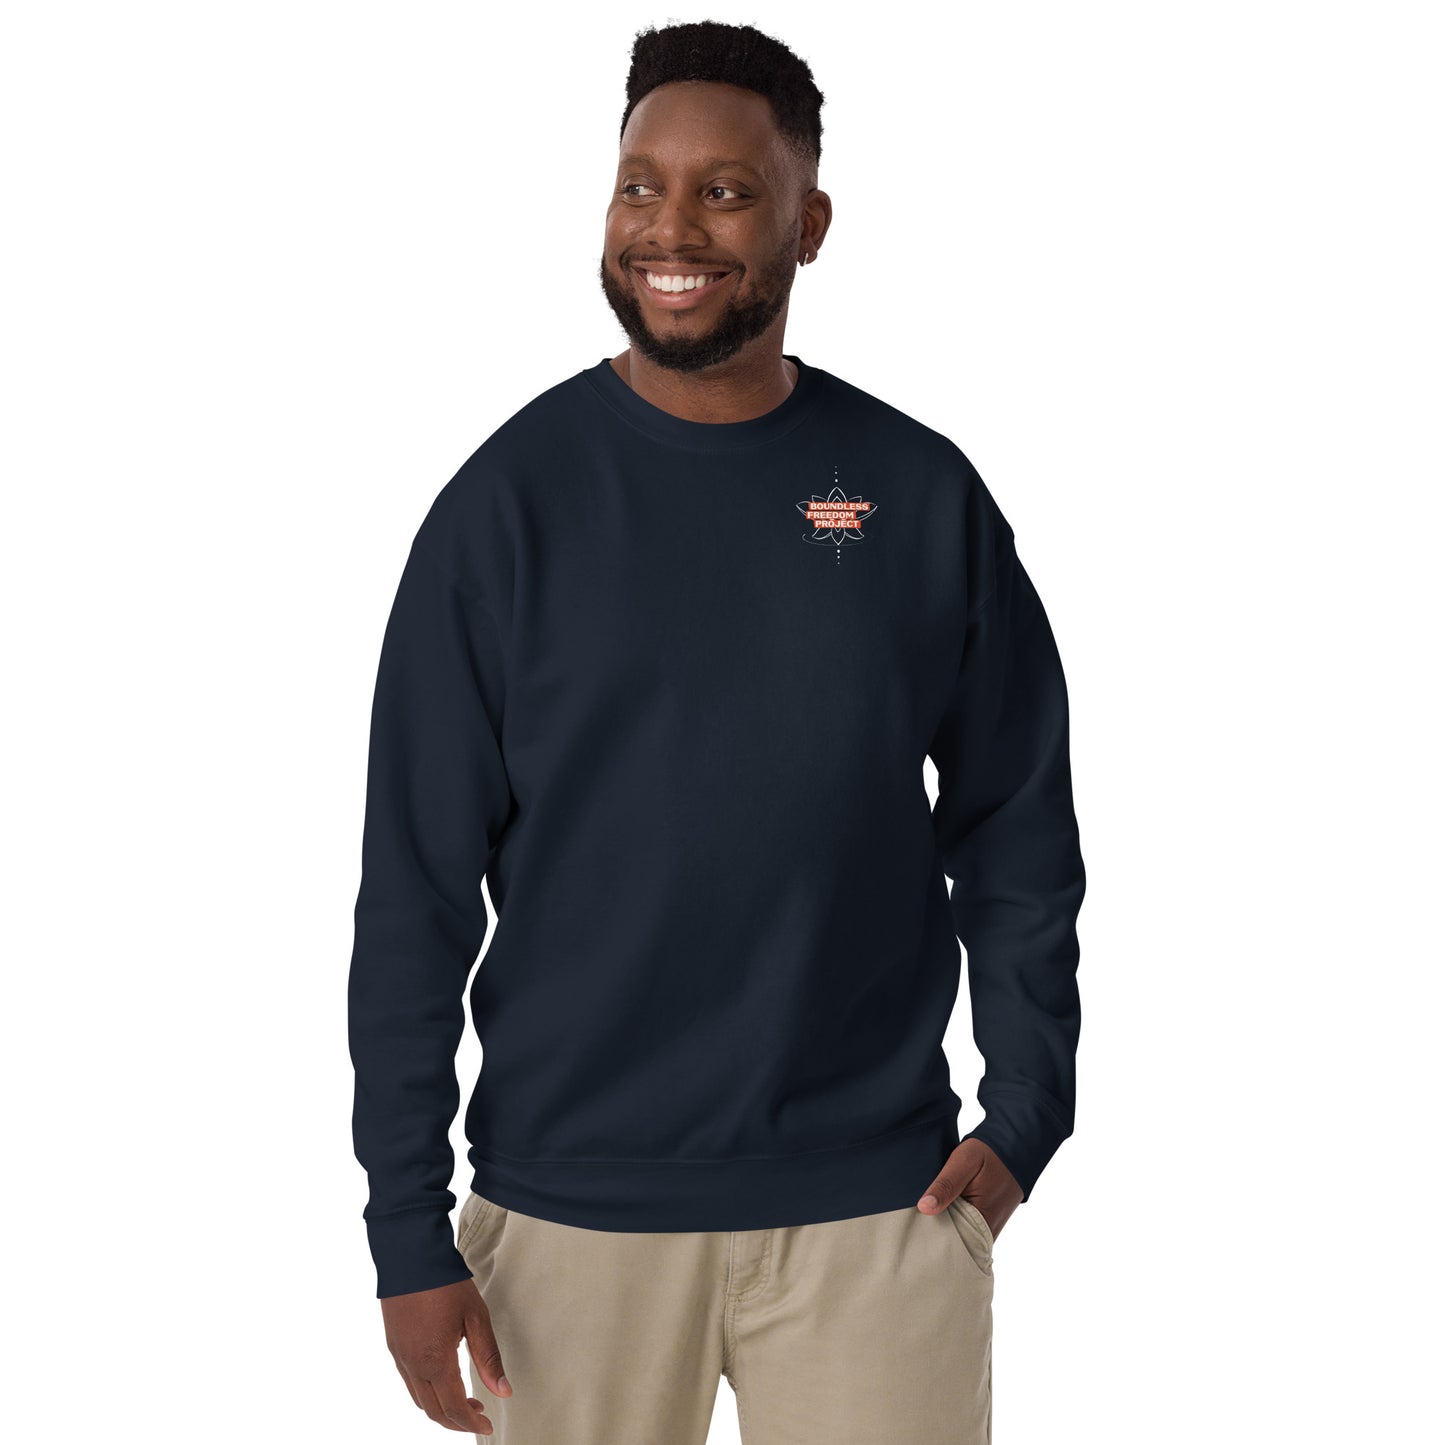 Boundless Freedom Premium Sweatshirt